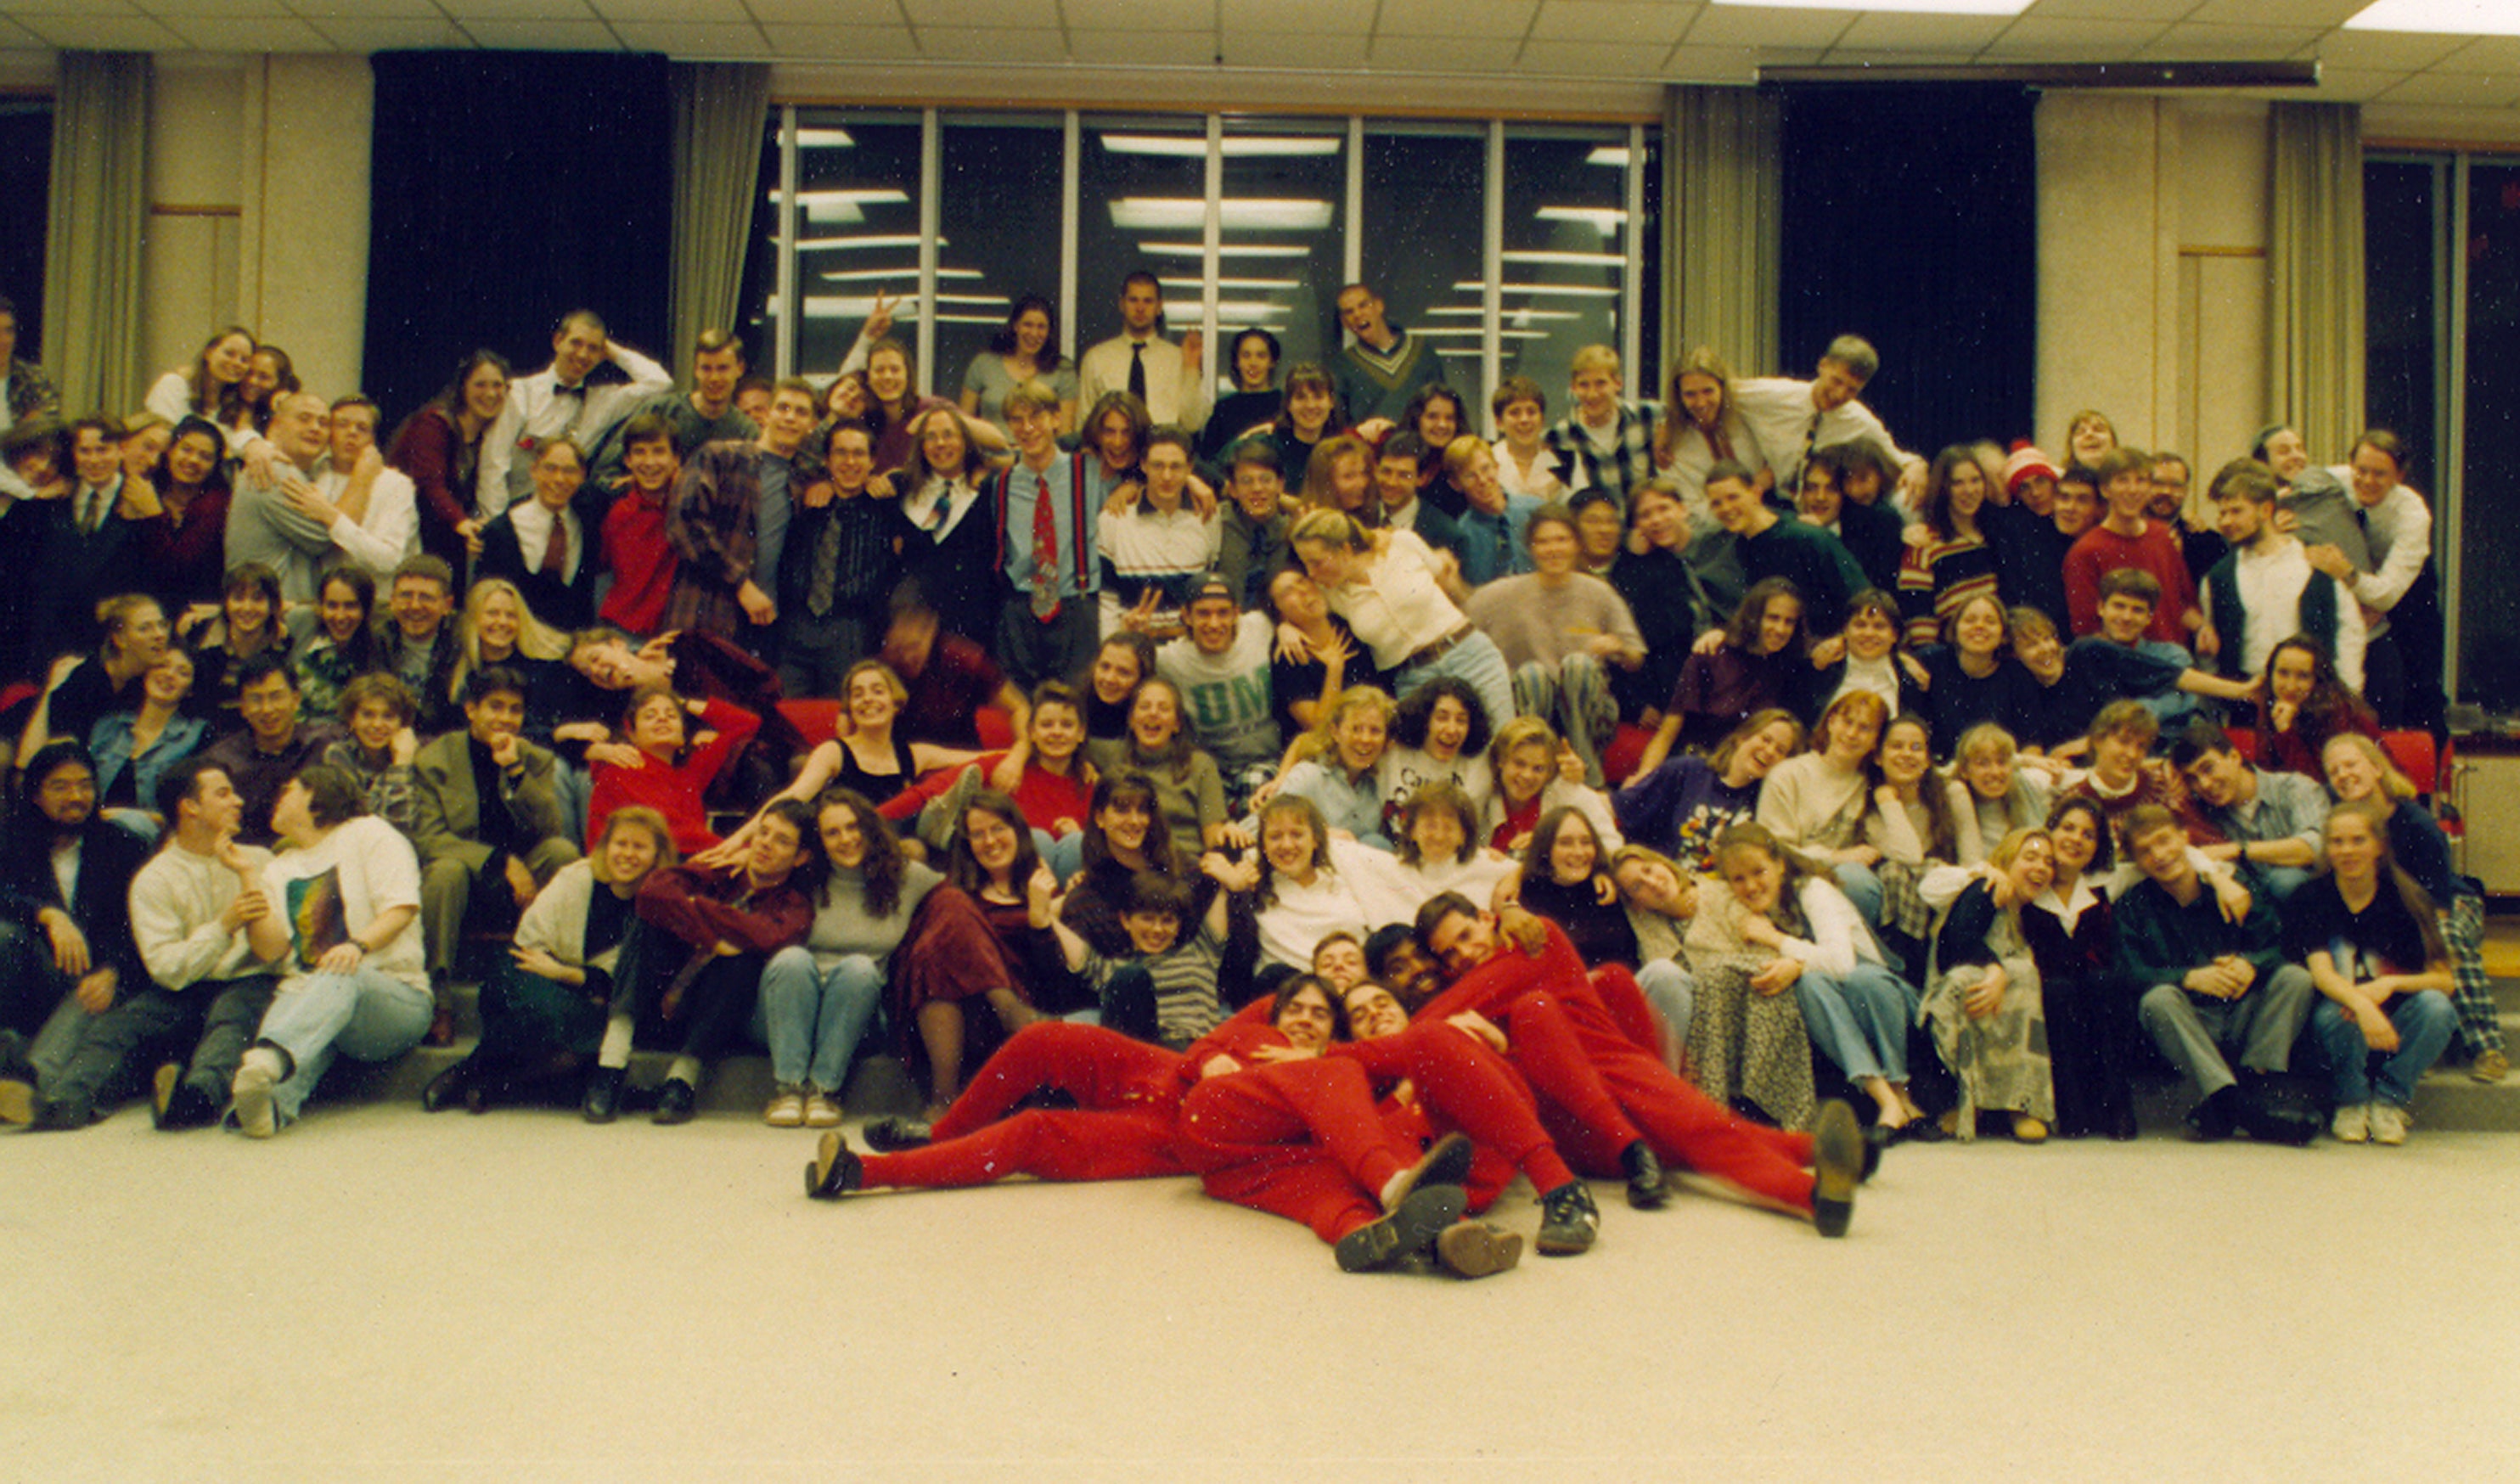  All College 1994-1995